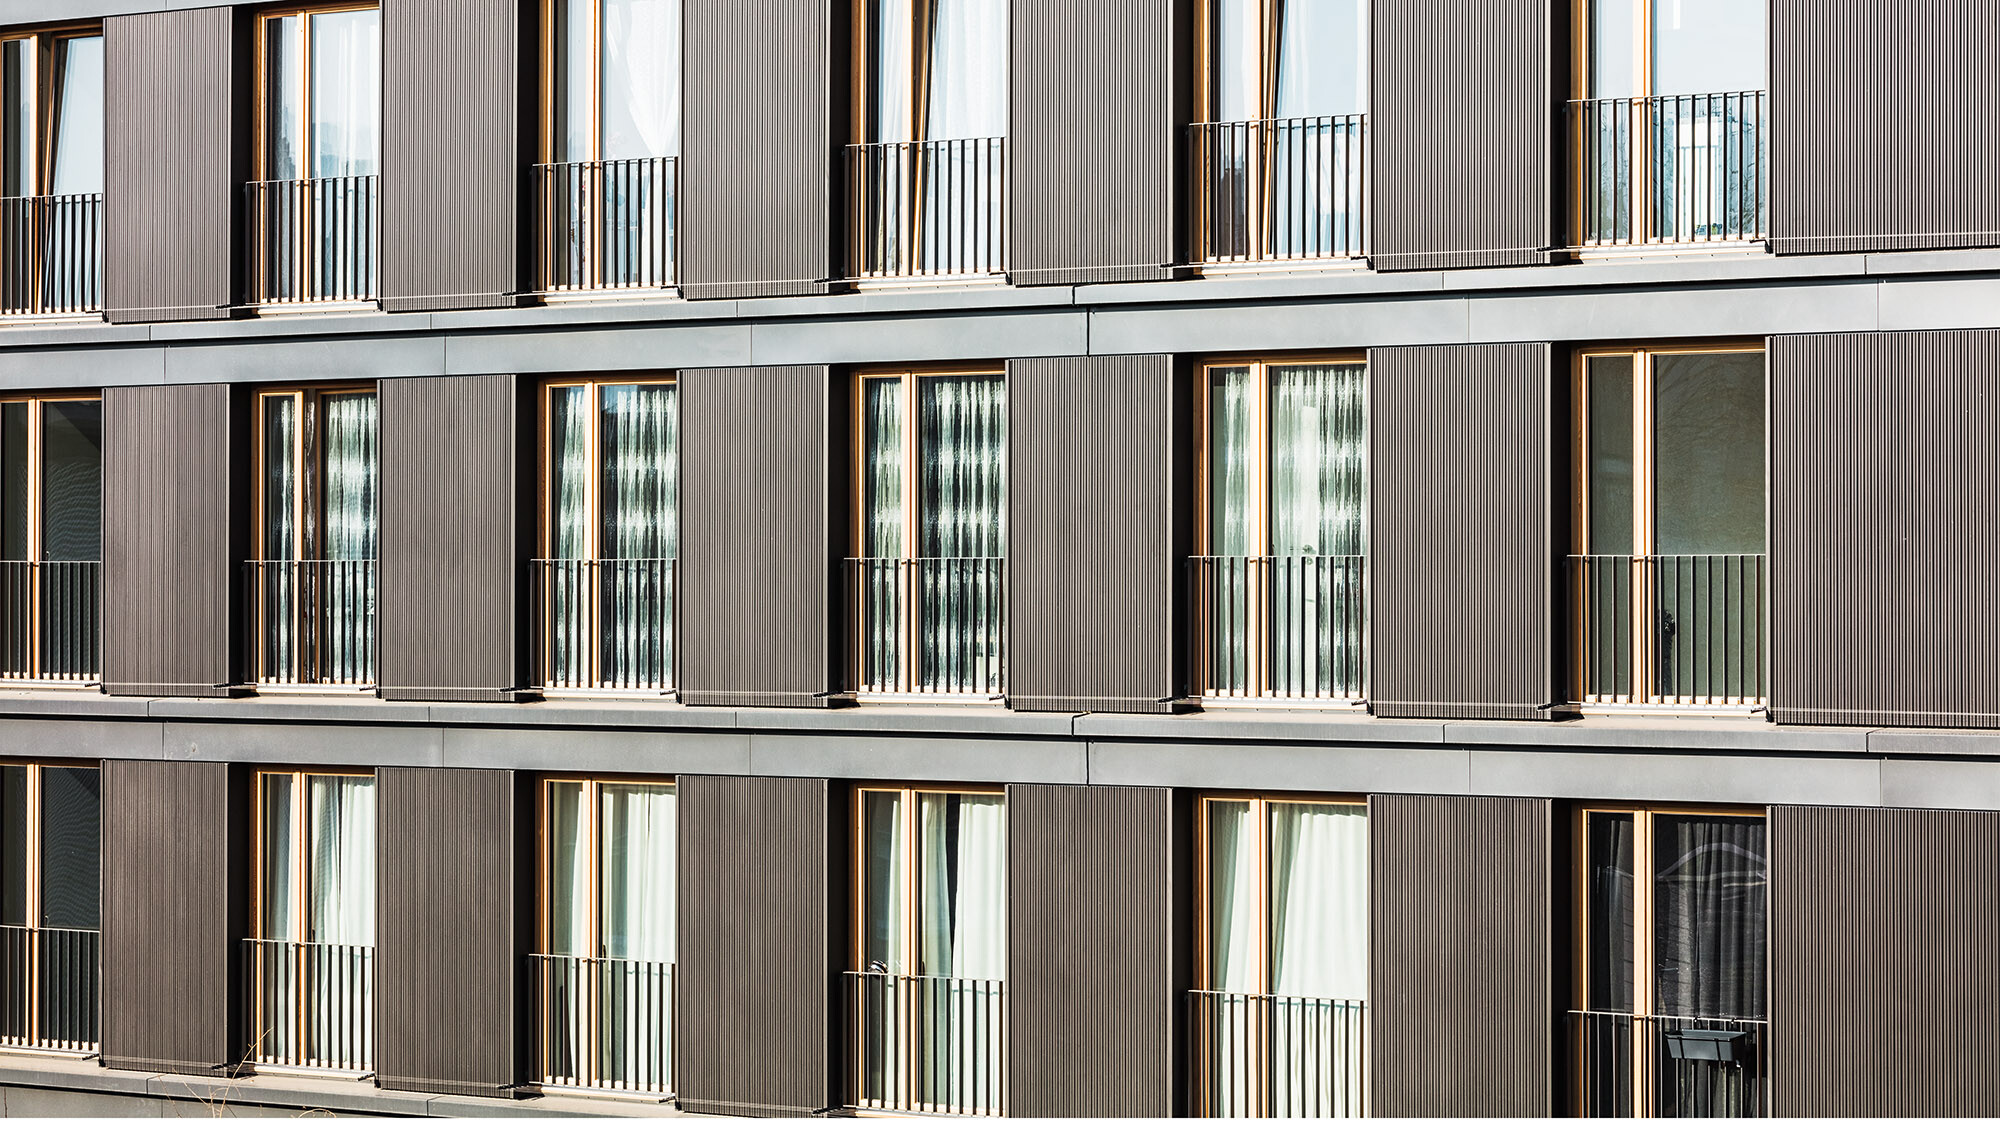 La façade profilée en aluminium et les fenêtres de la construction vues de près.